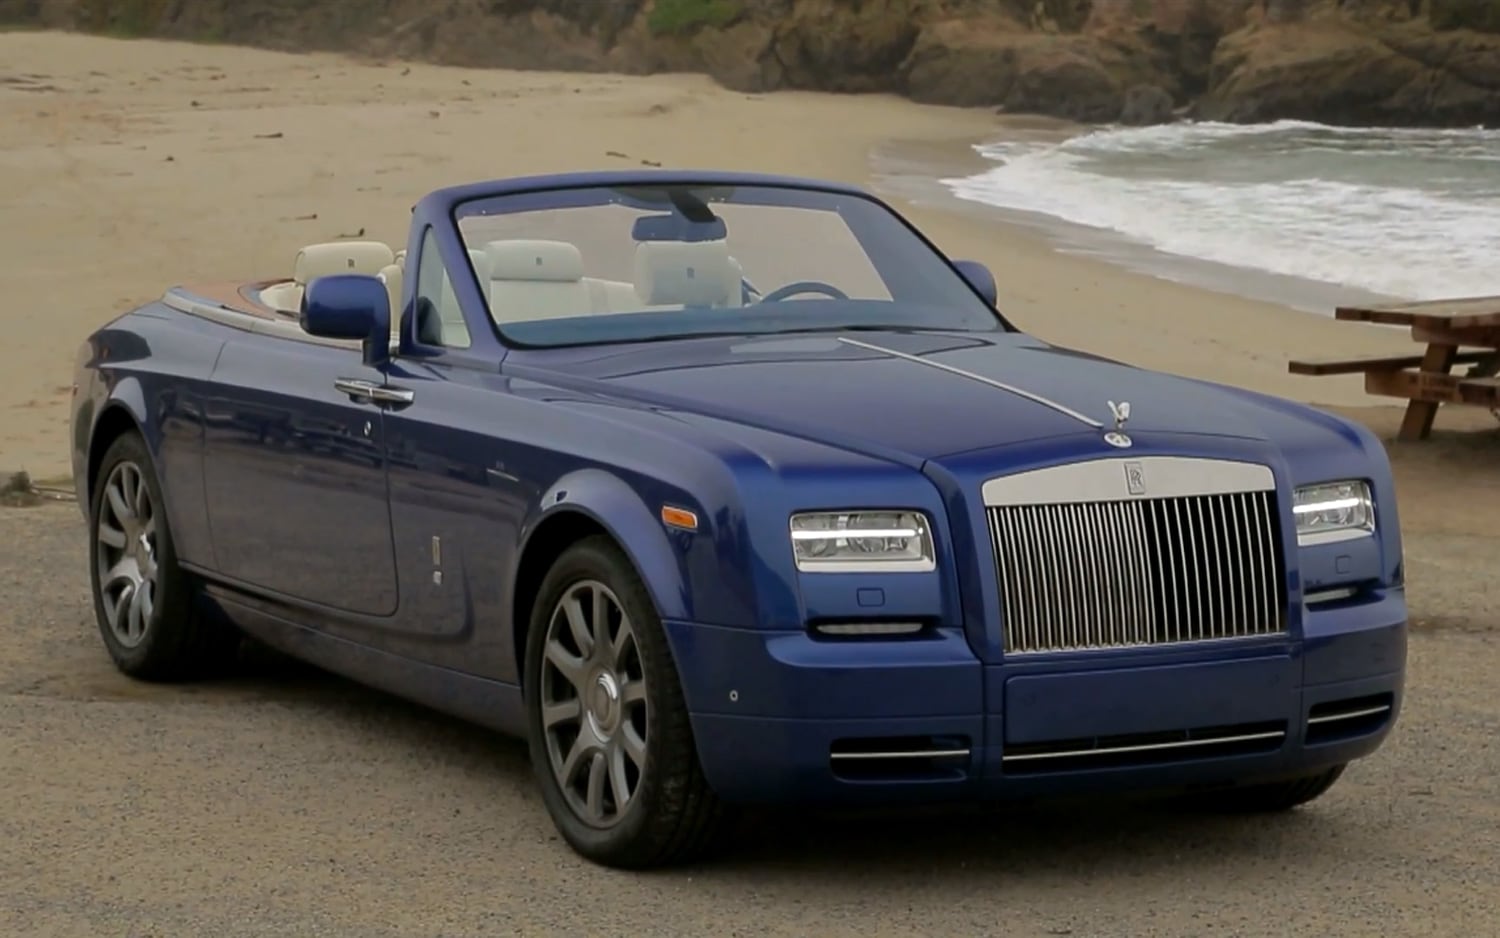 MT Video: 2013 Rolls-Royce Phantom Drophead Coupe - True Rolls or a Big BMW?